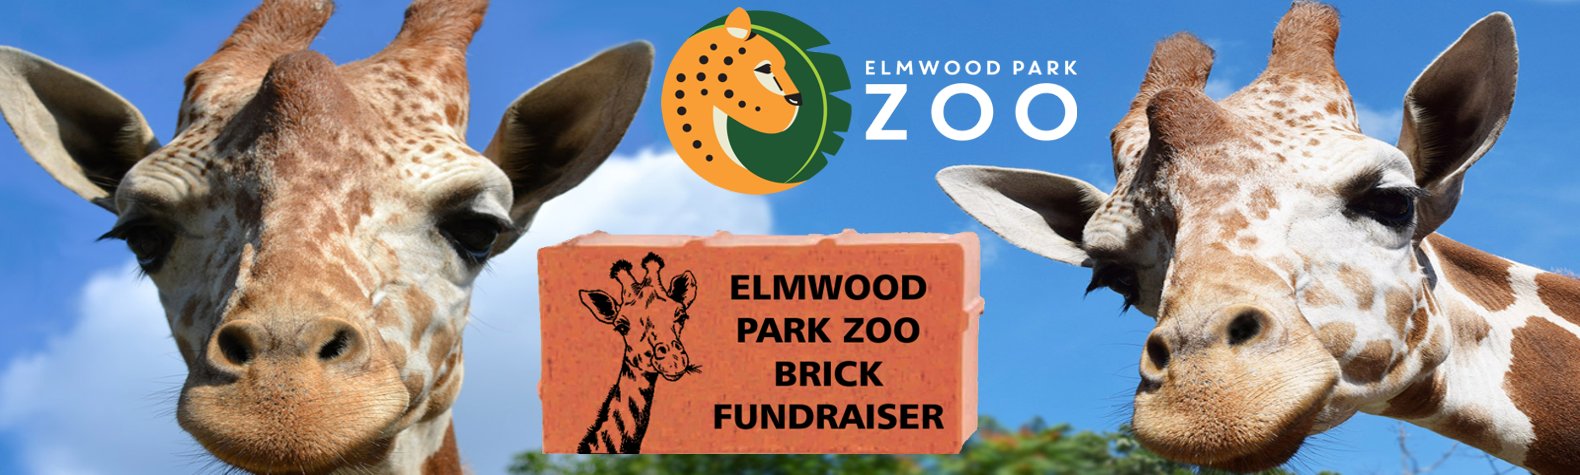 elmwood-banner